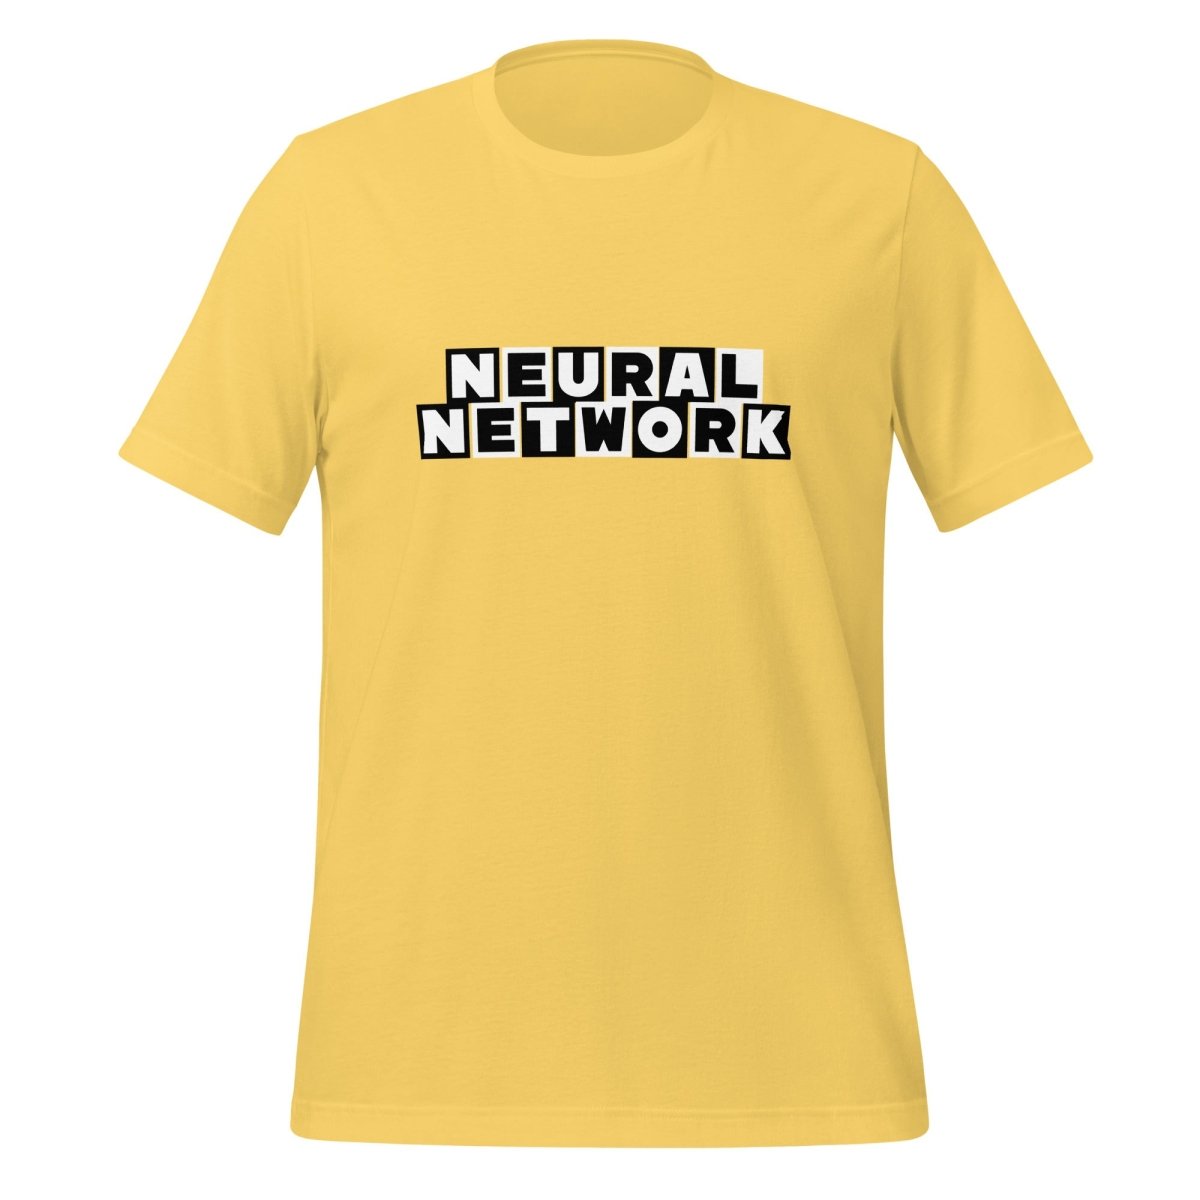 NEURAL NETWORK T - Shirt (unisex) - Yellow - AI Store